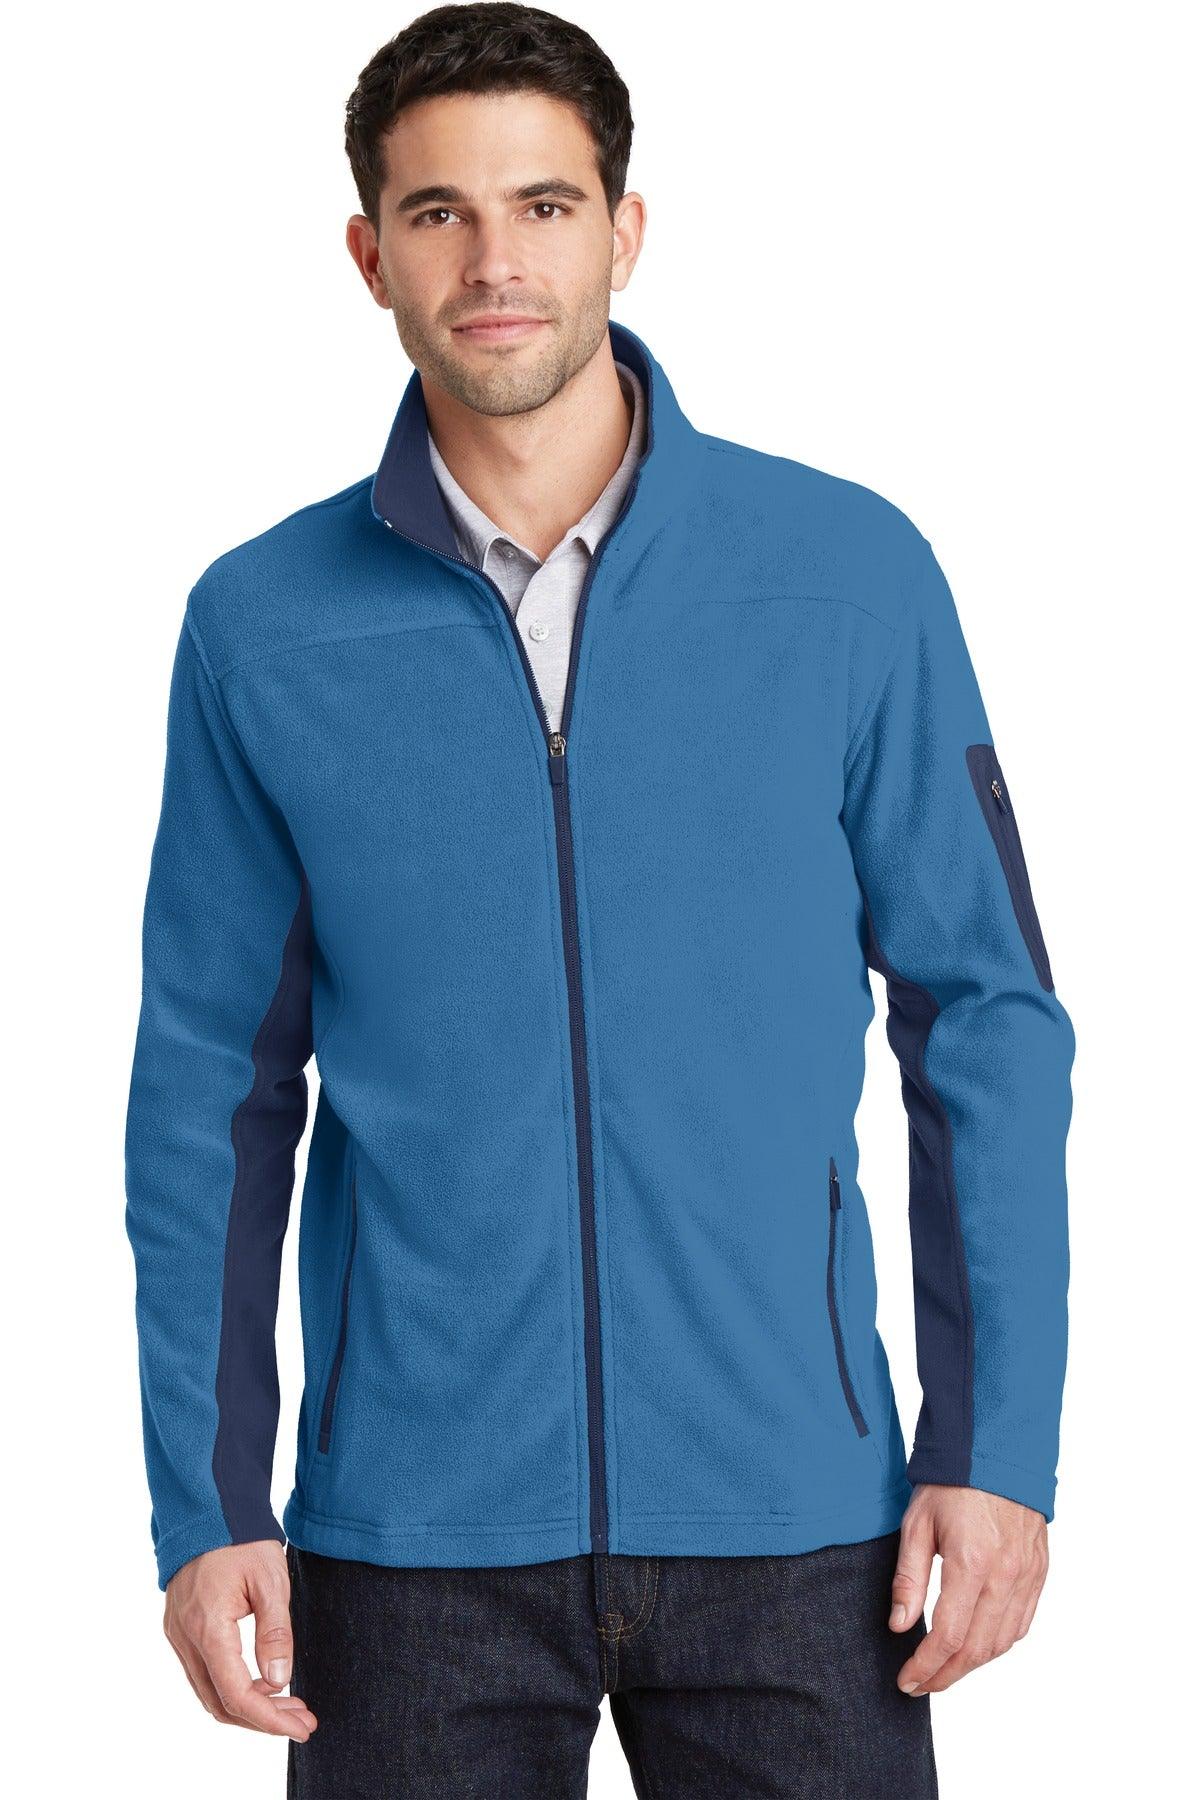 Port Authority Summit Fleece Full-Zip Jacket. F233 - Dresses Max